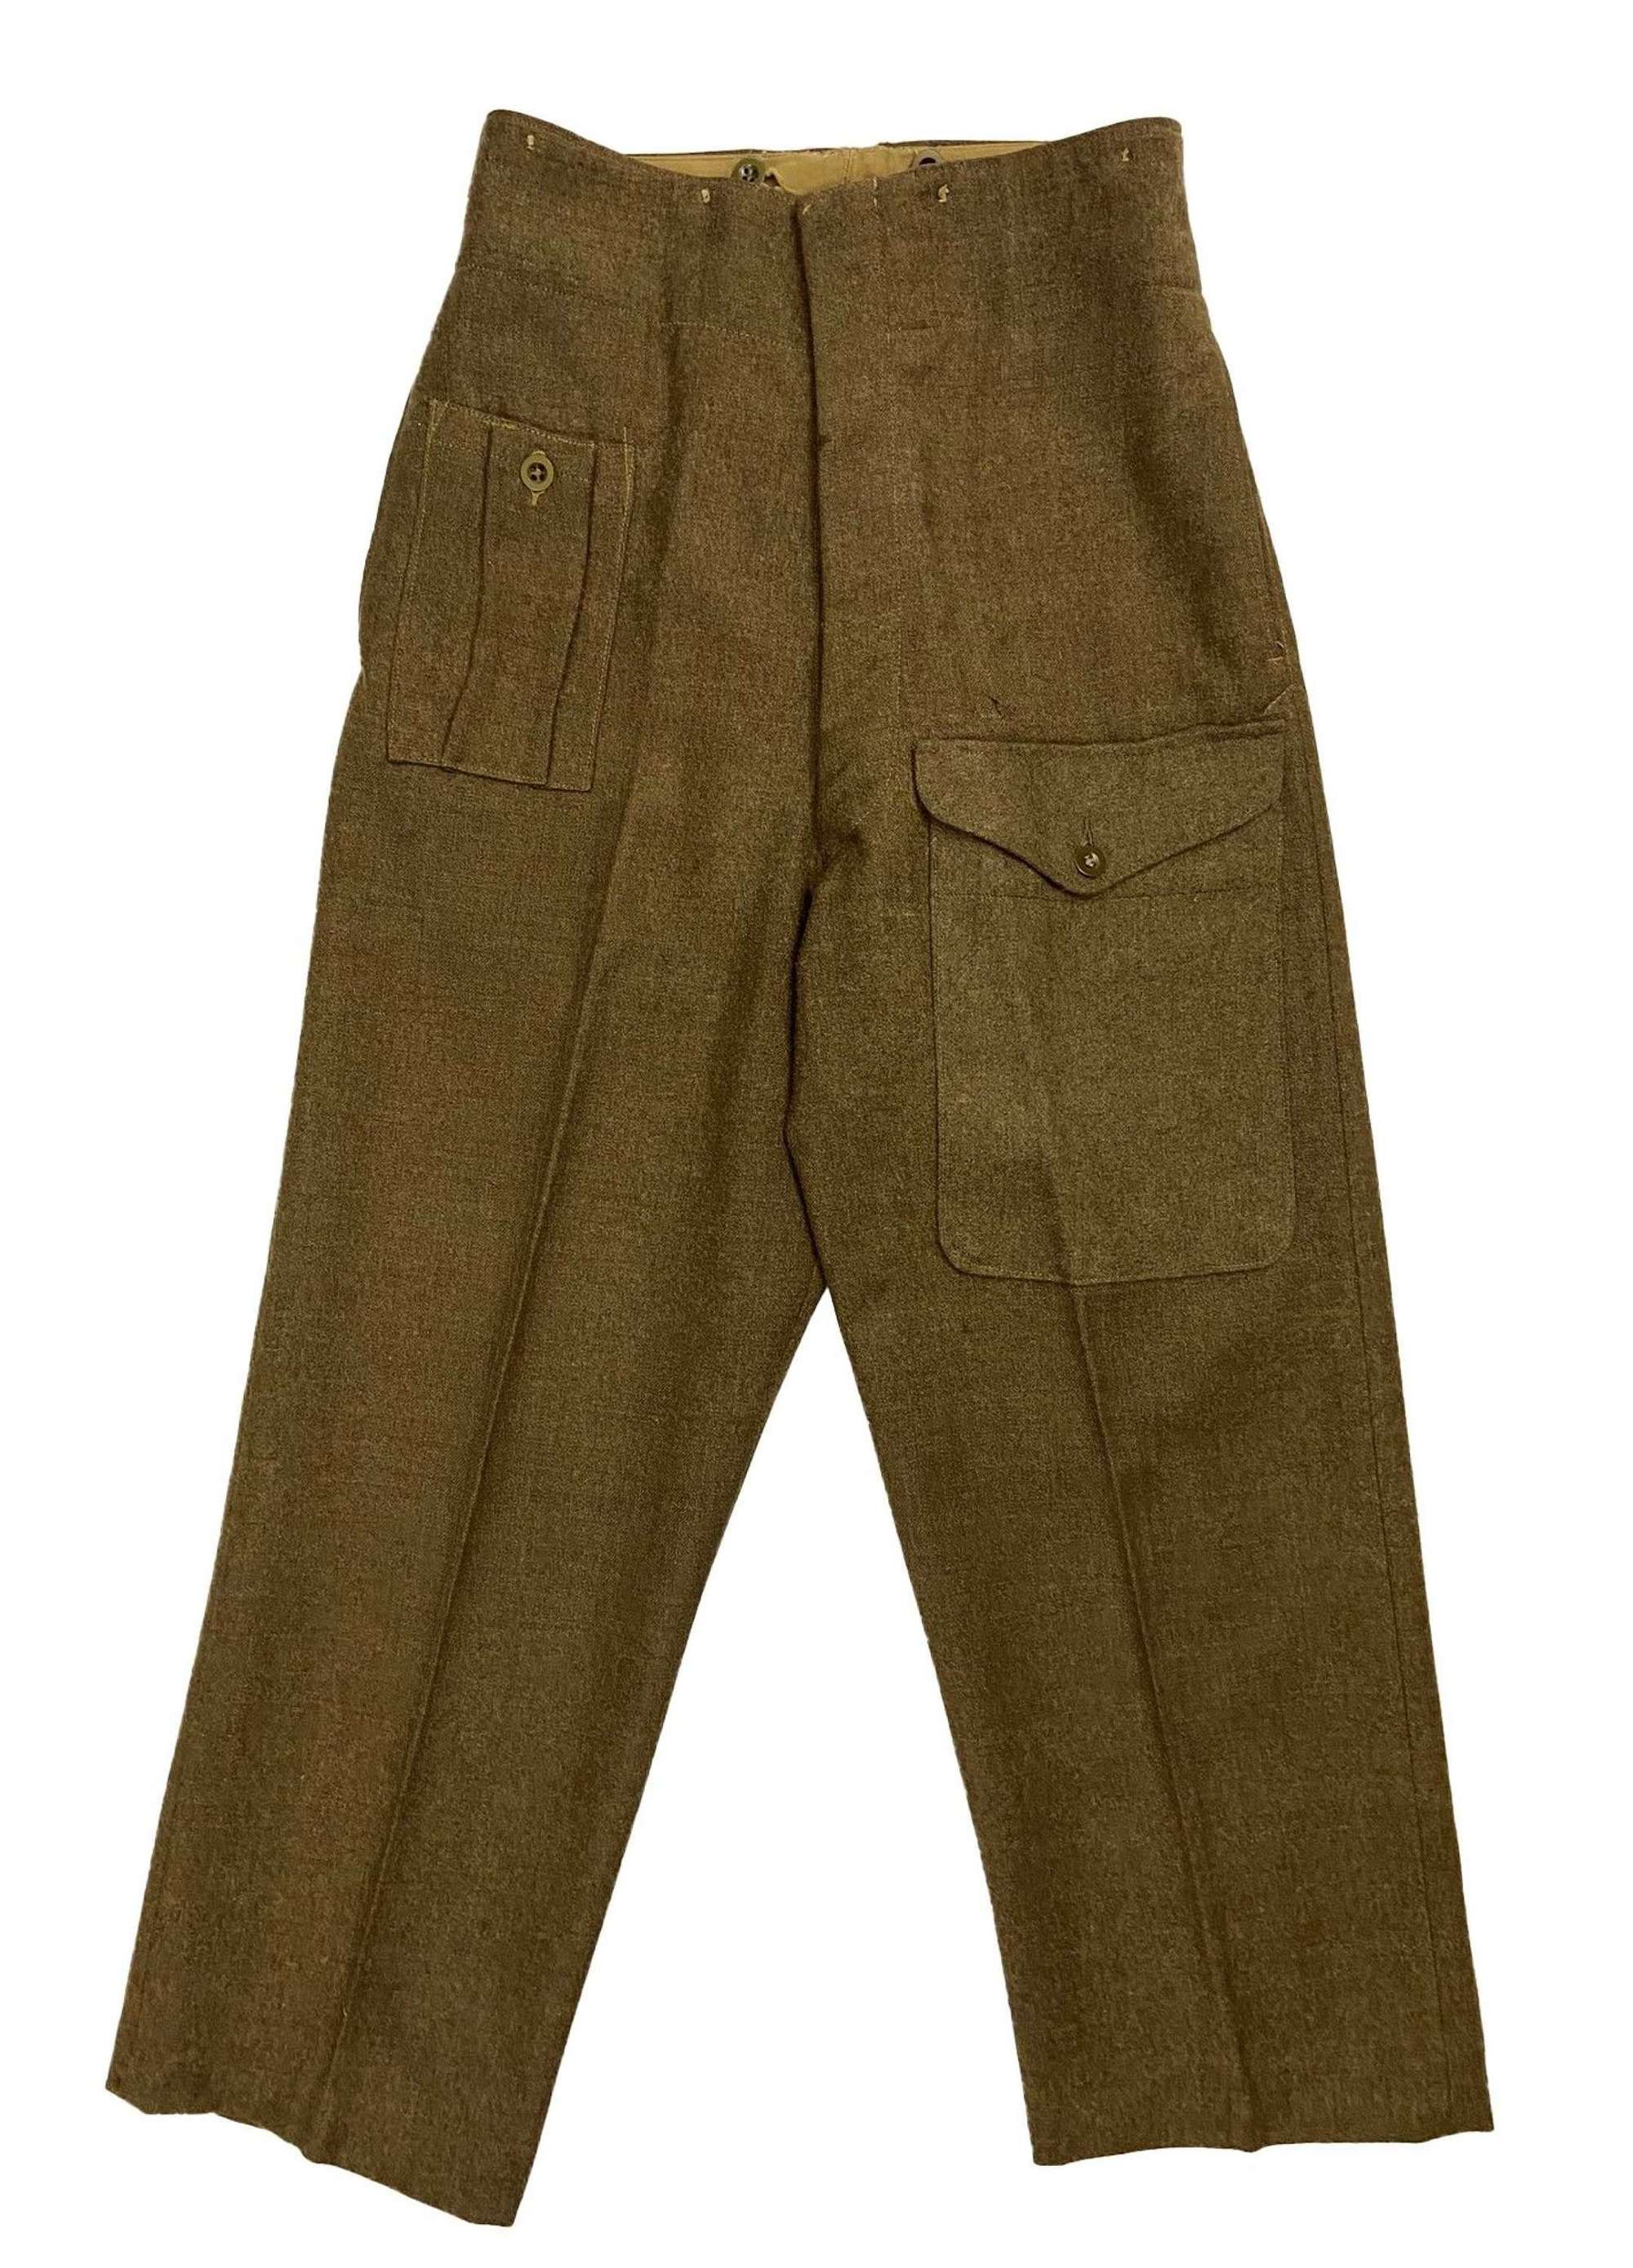 Original 1945 Dated 1940 Pattern (Austerity) Battledress Trousers - 10